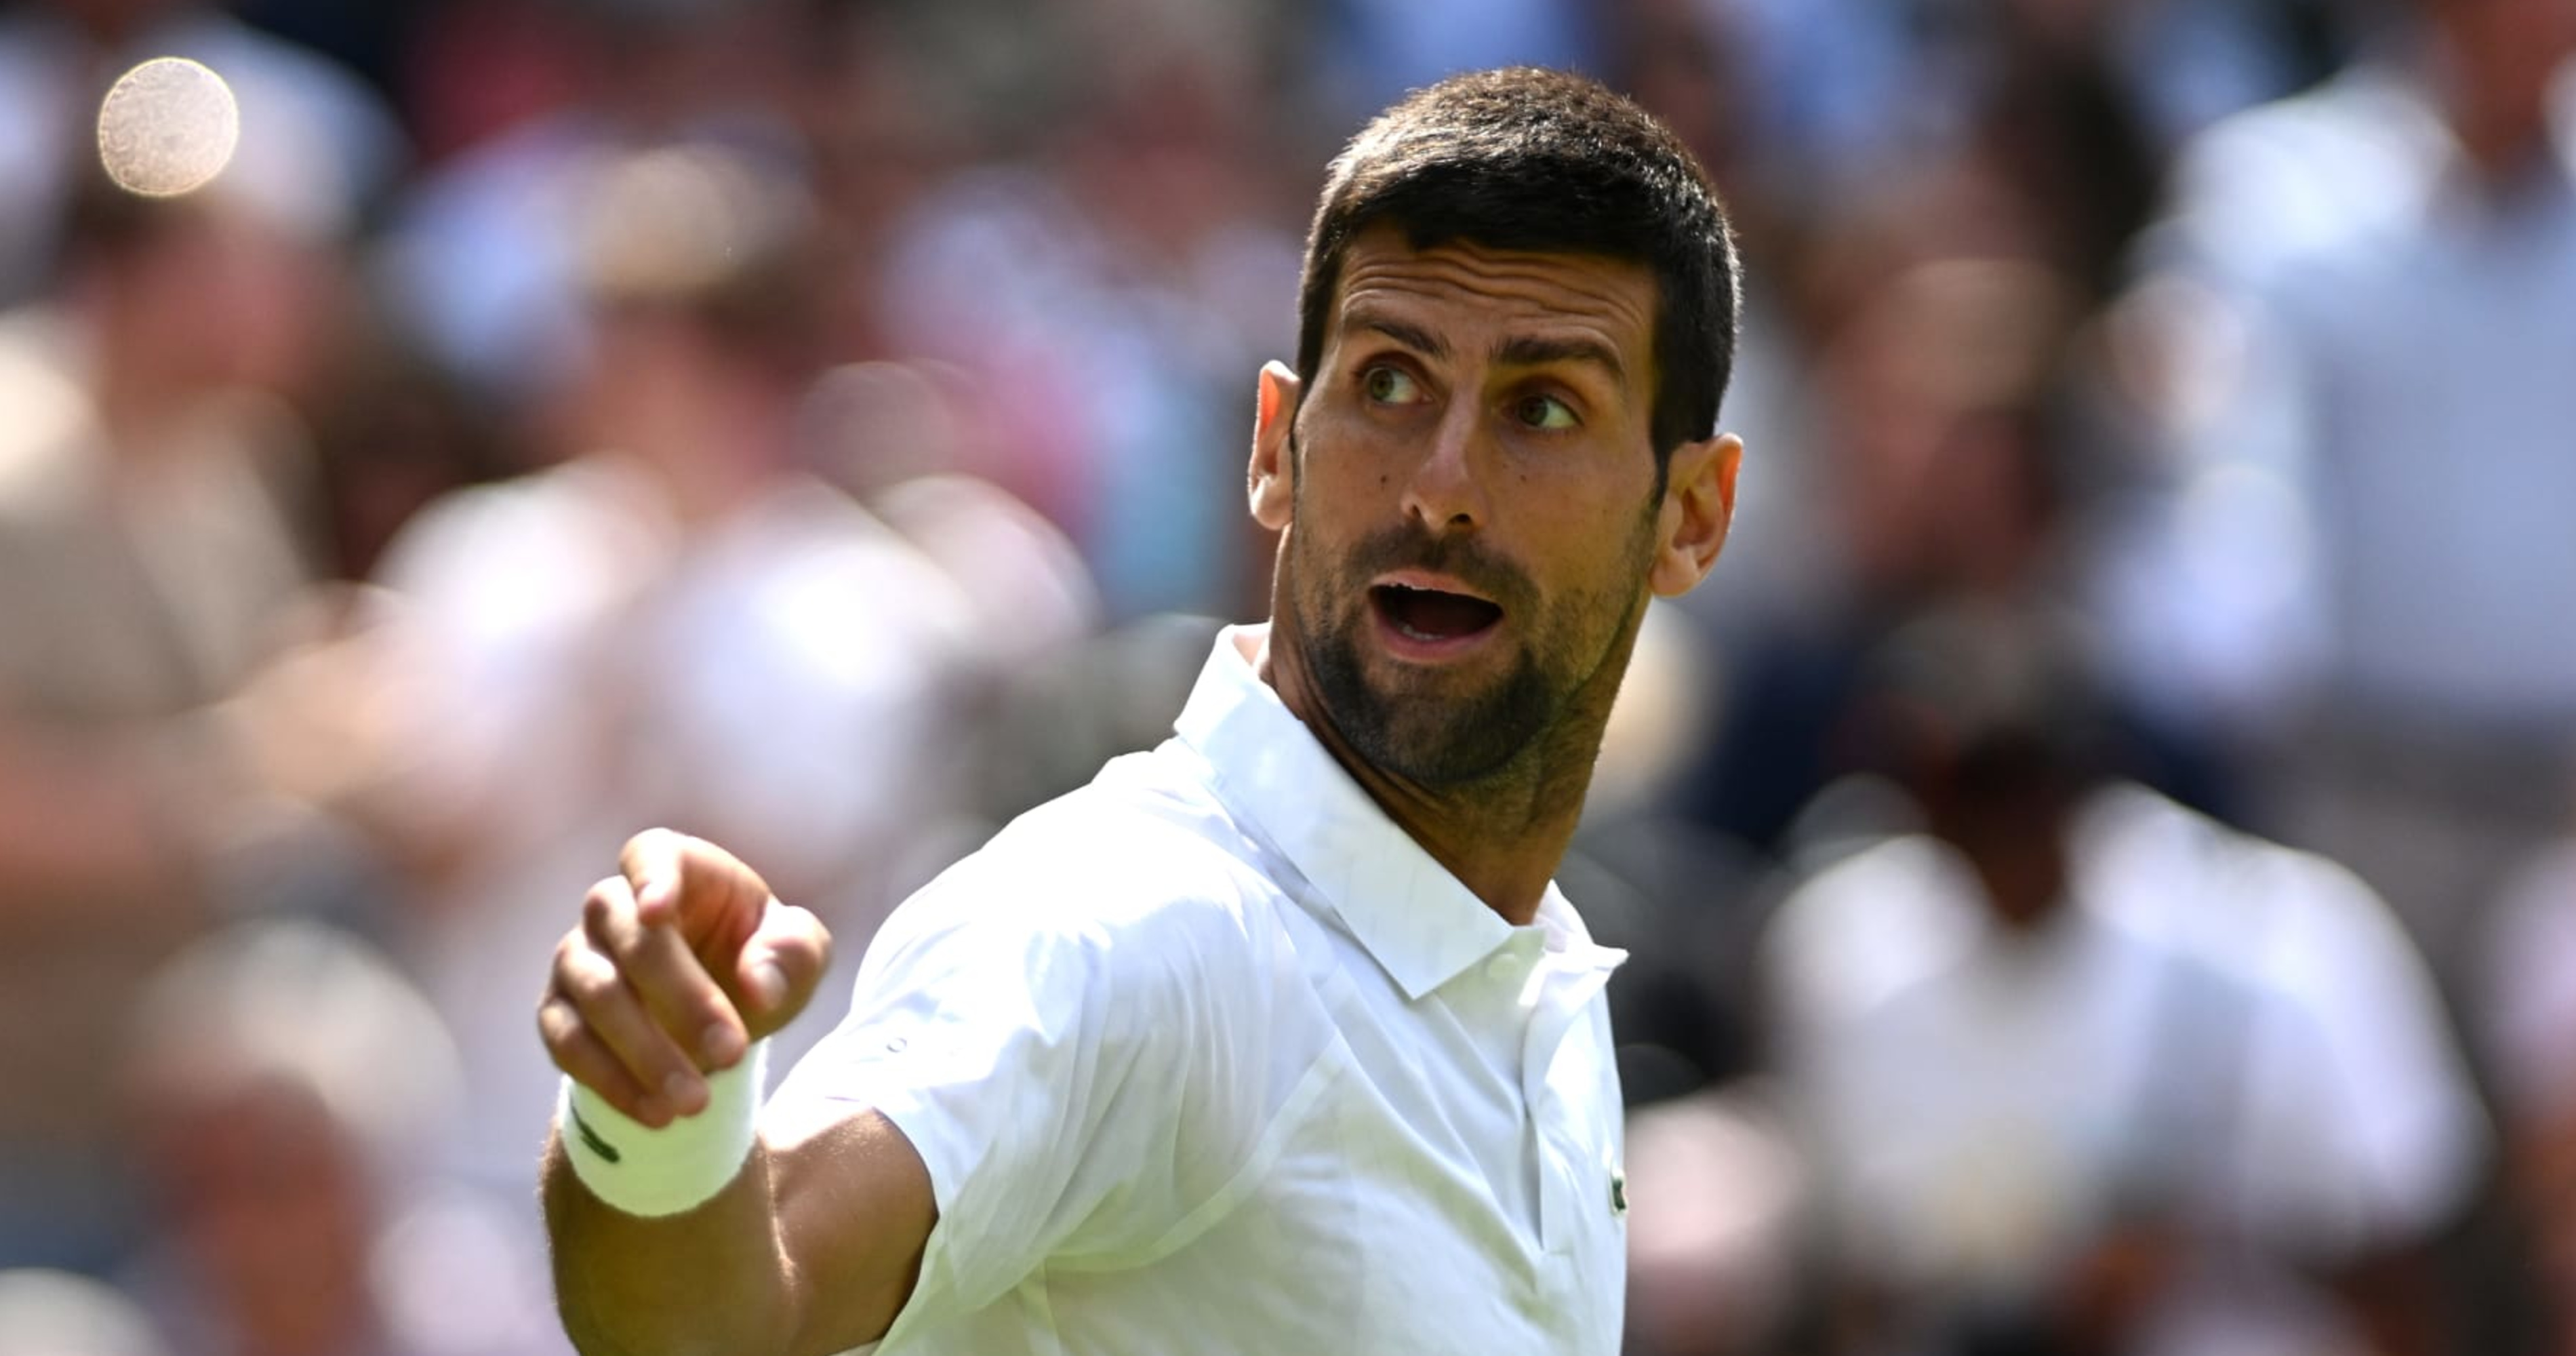 Novak Djokovics Wimbledon Dominance Applauded by Fans After Win vs